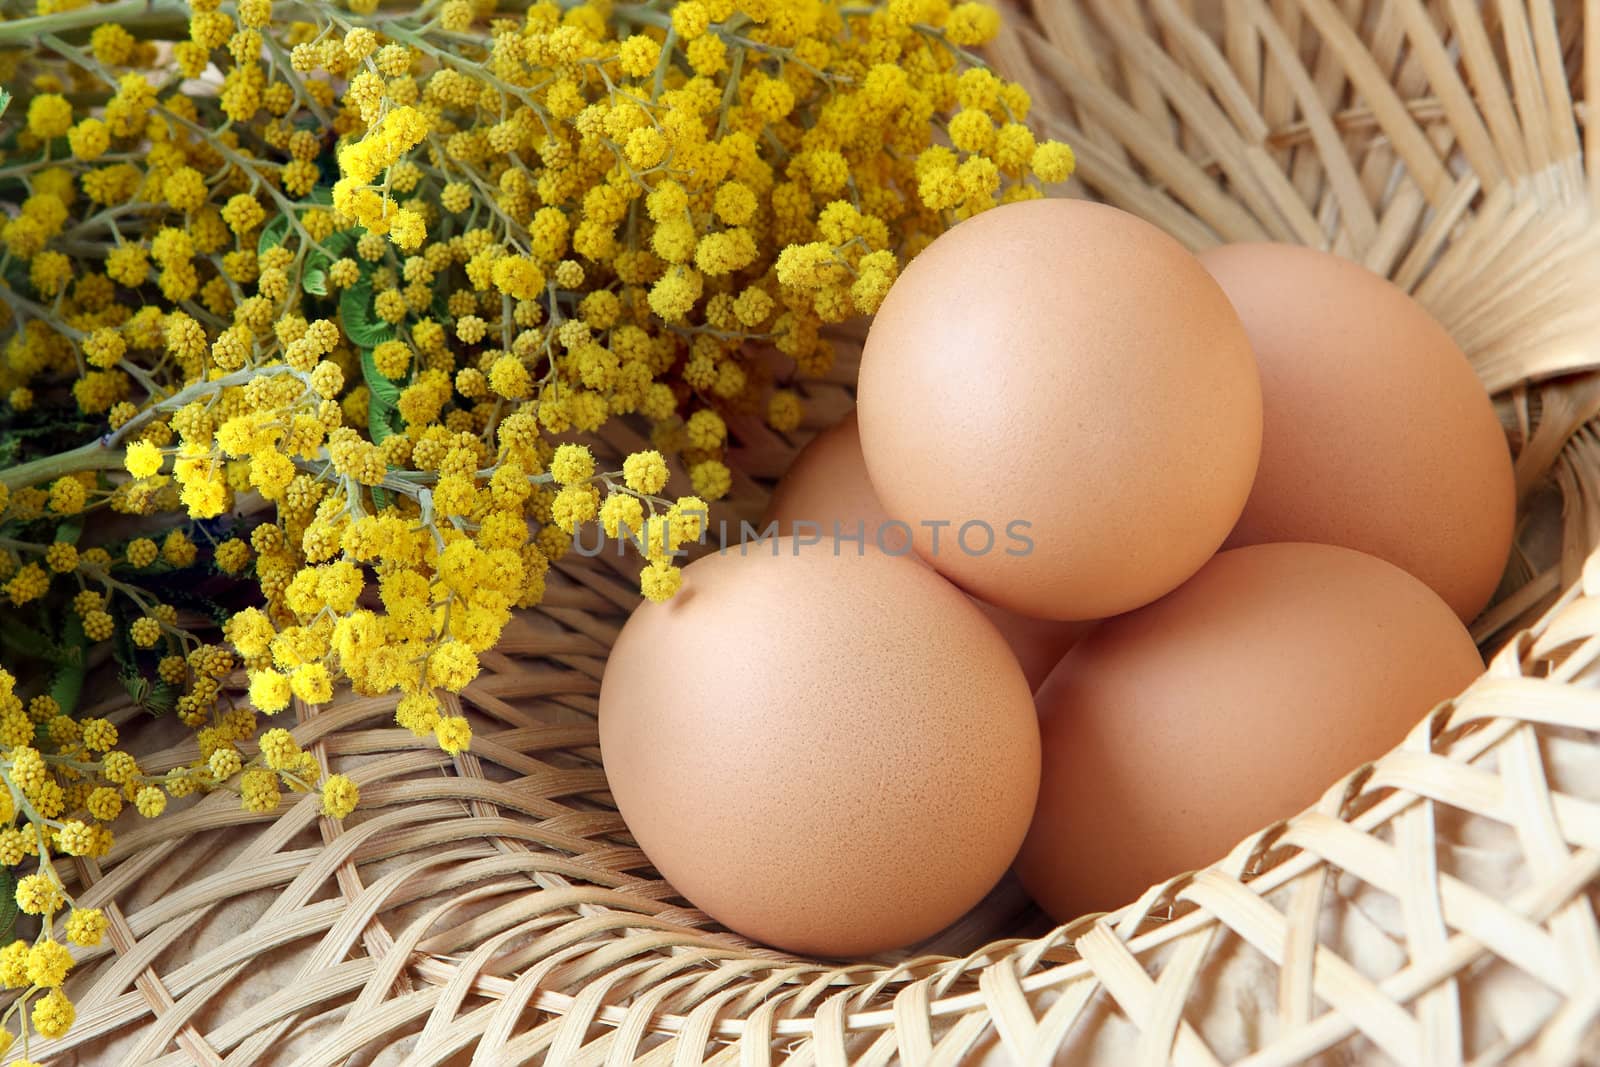 A wicker basket full of brown free range eggs